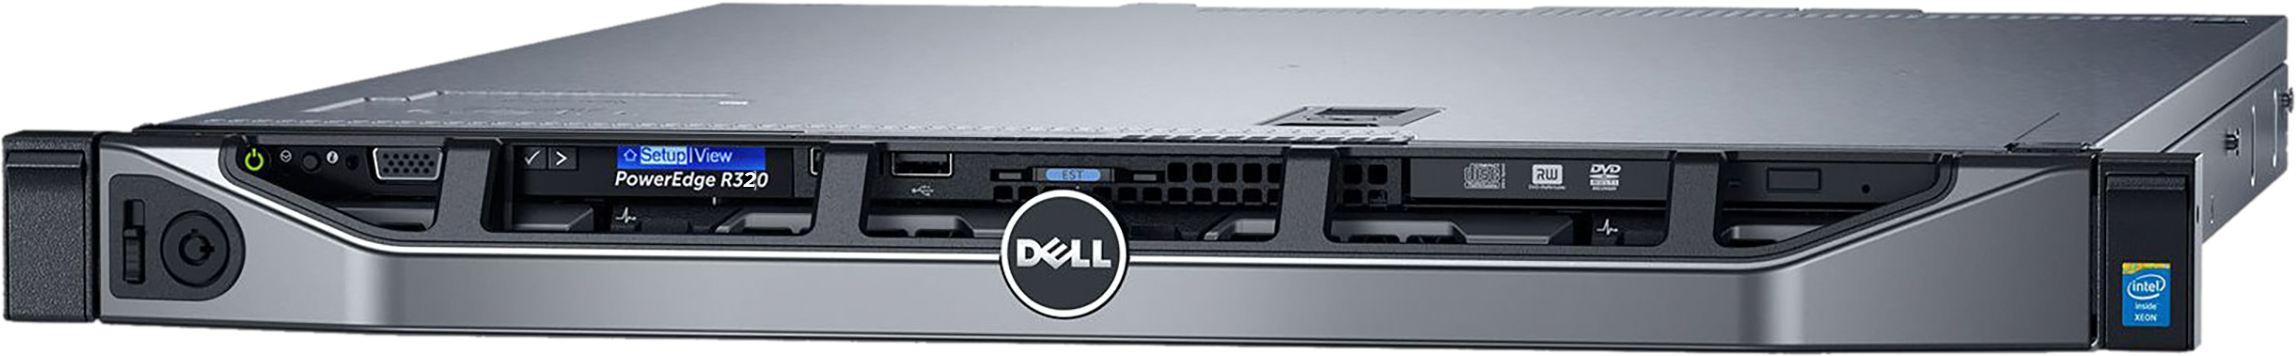 Аренда физического сервера Dell R320 / E5-2430 v2 / 16 GB RAM / 4 × 6 TB HDD / H310